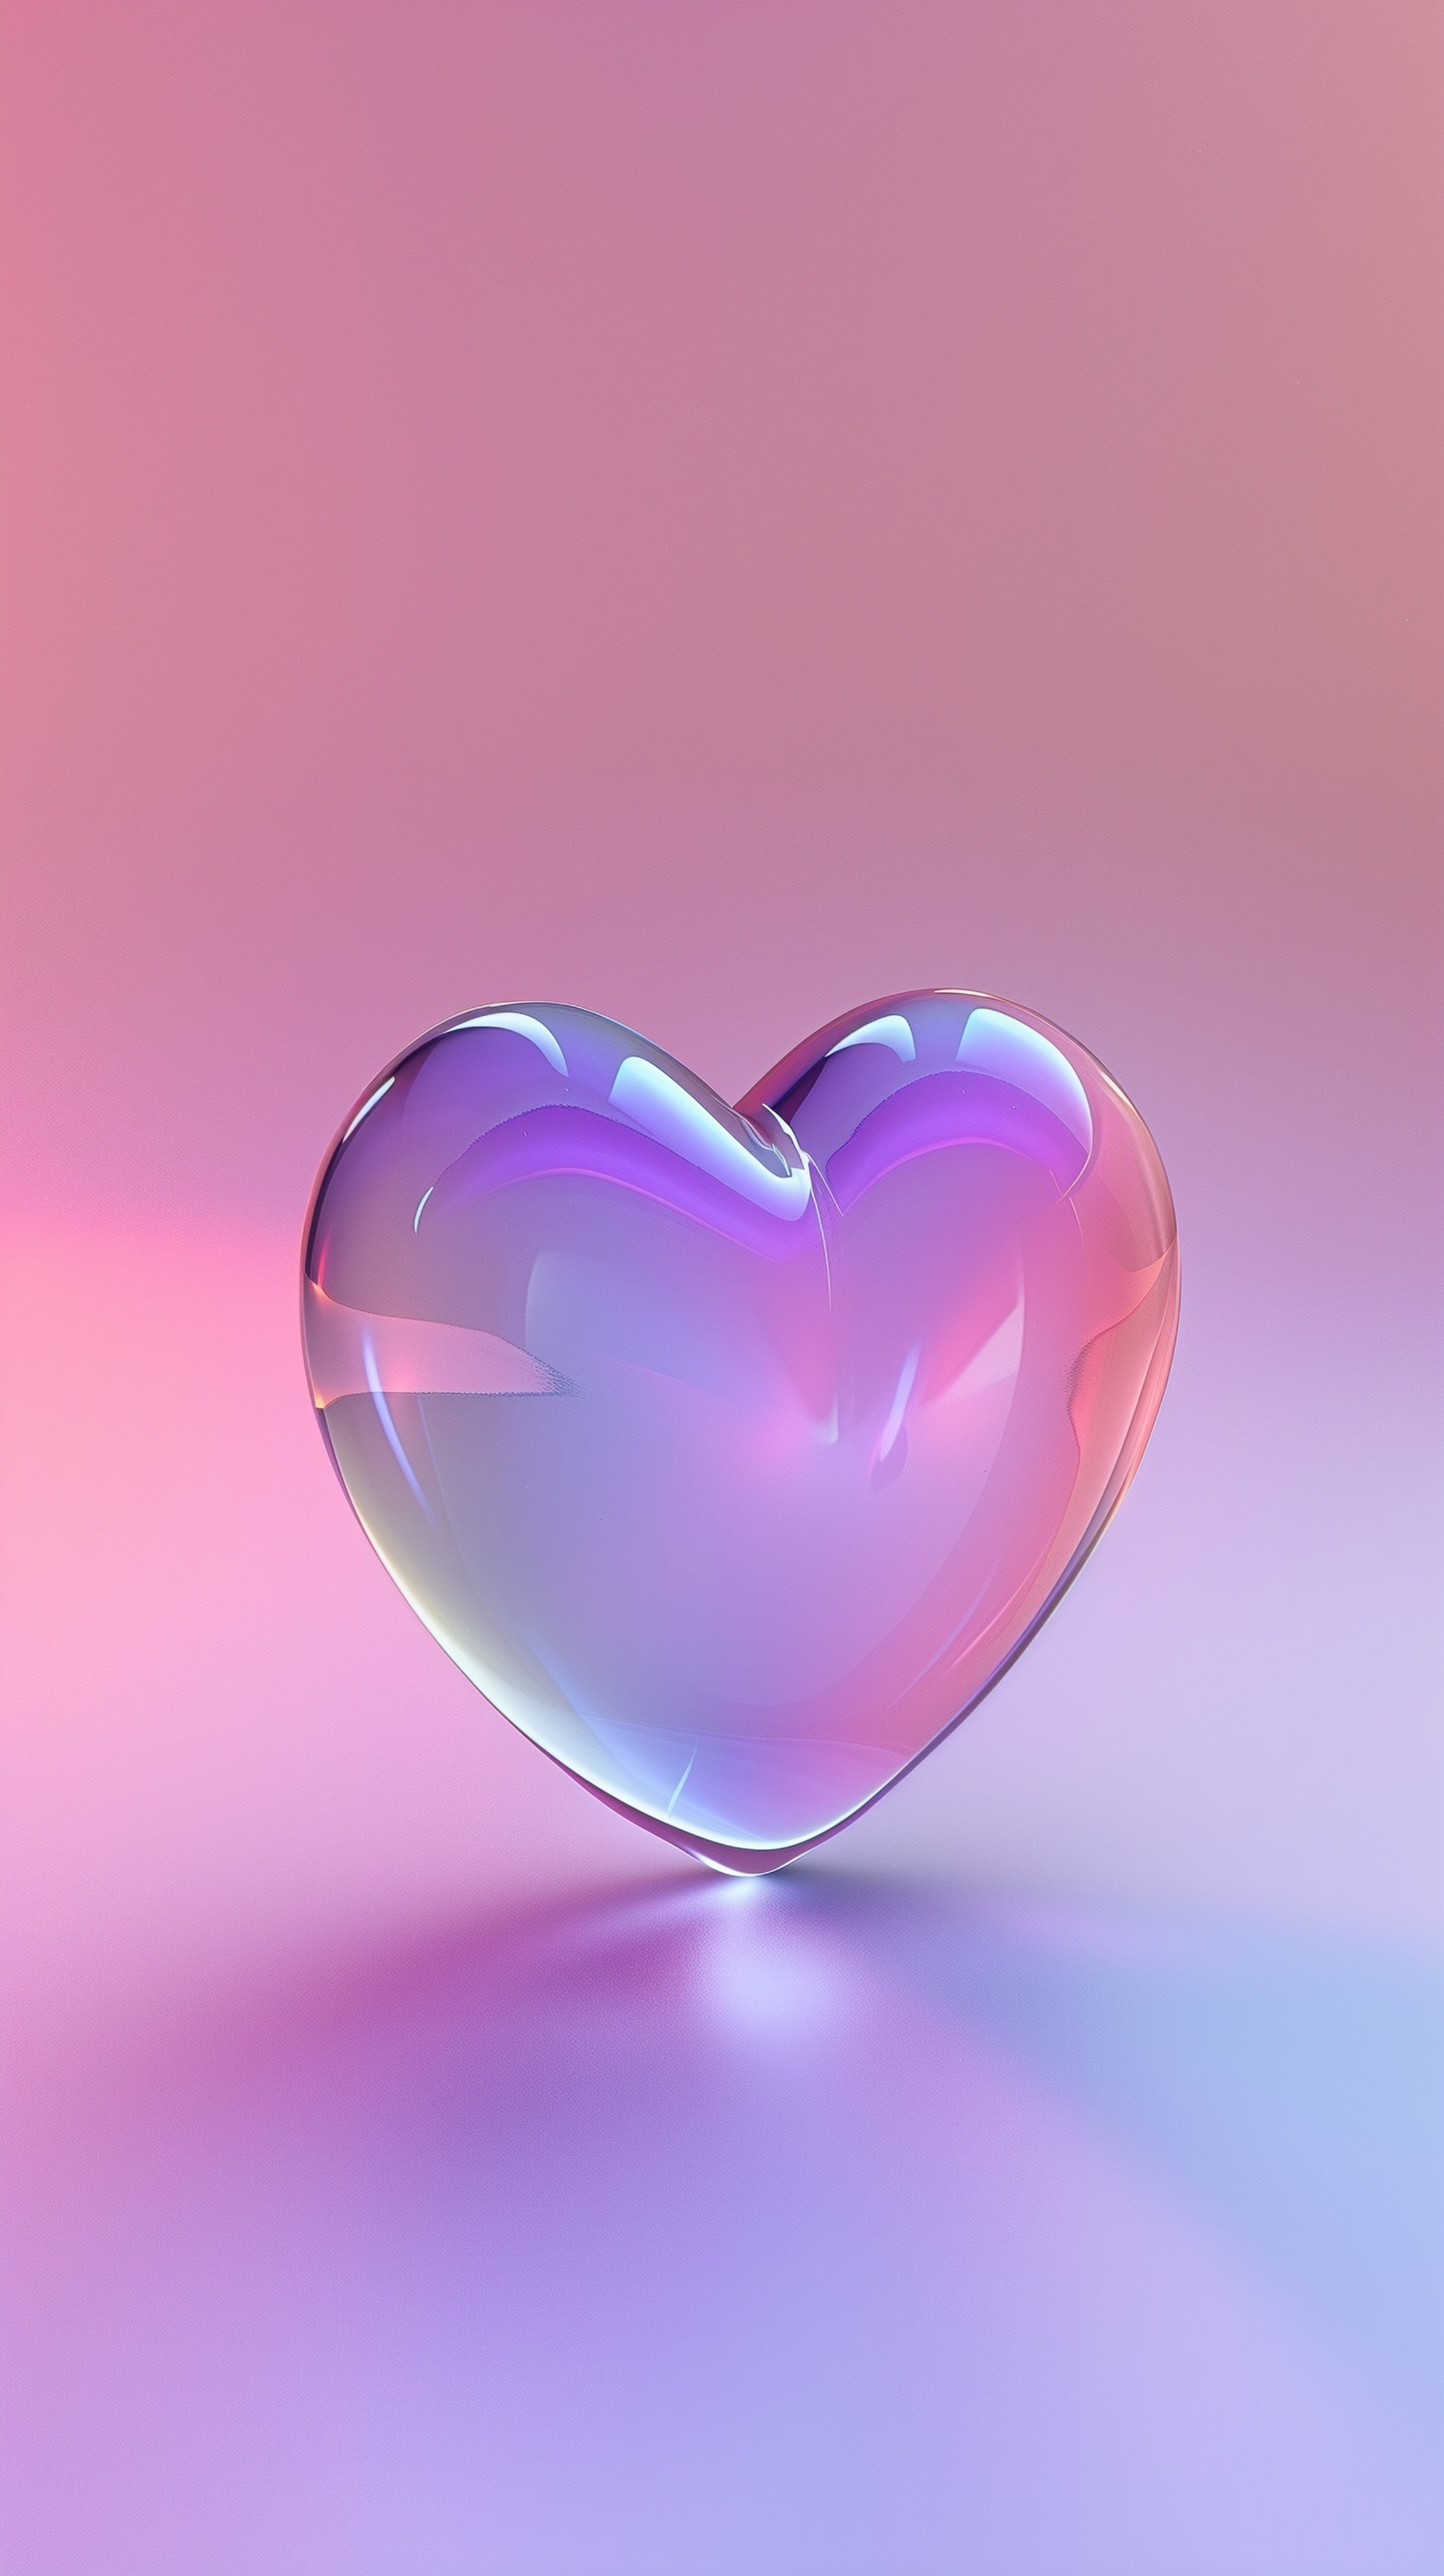 Colorful Glass Heart on Pink Background Hình nền[47d8940110524ca1b371]